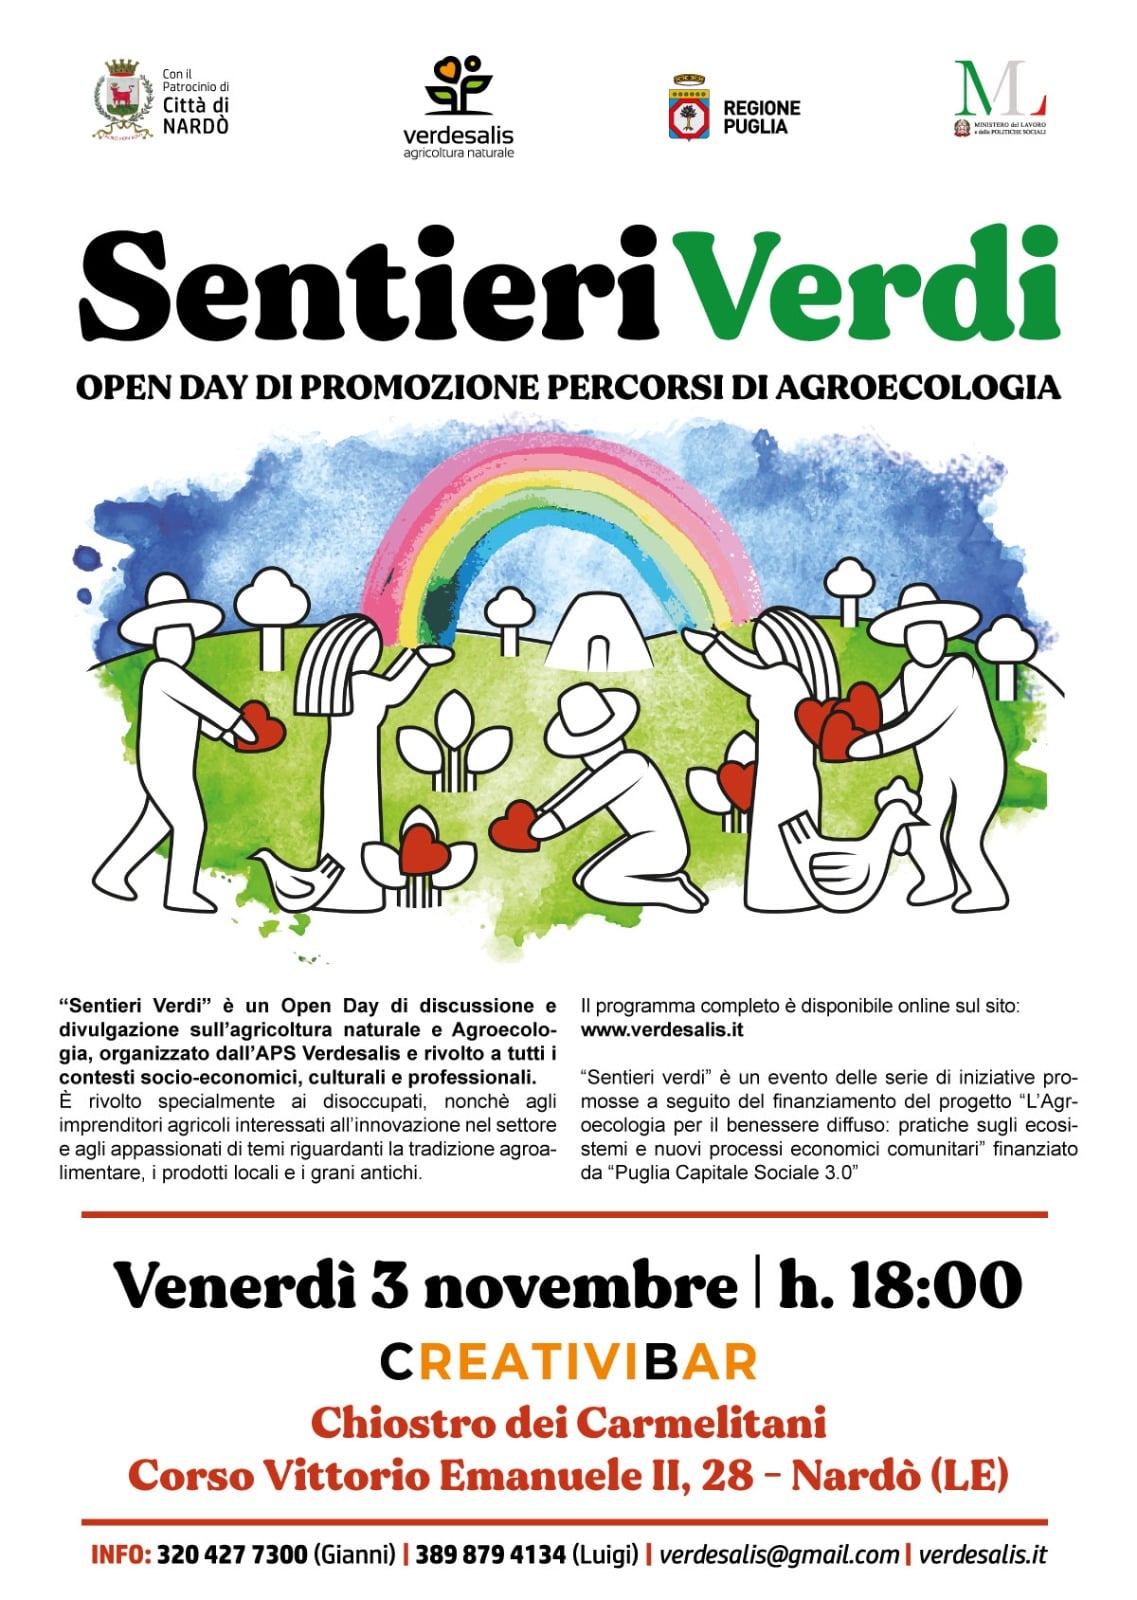 Verdesalis, locandina Open Day Sentieri Verdi - Bando Regionale Puglia Capitale Sociale 3.0